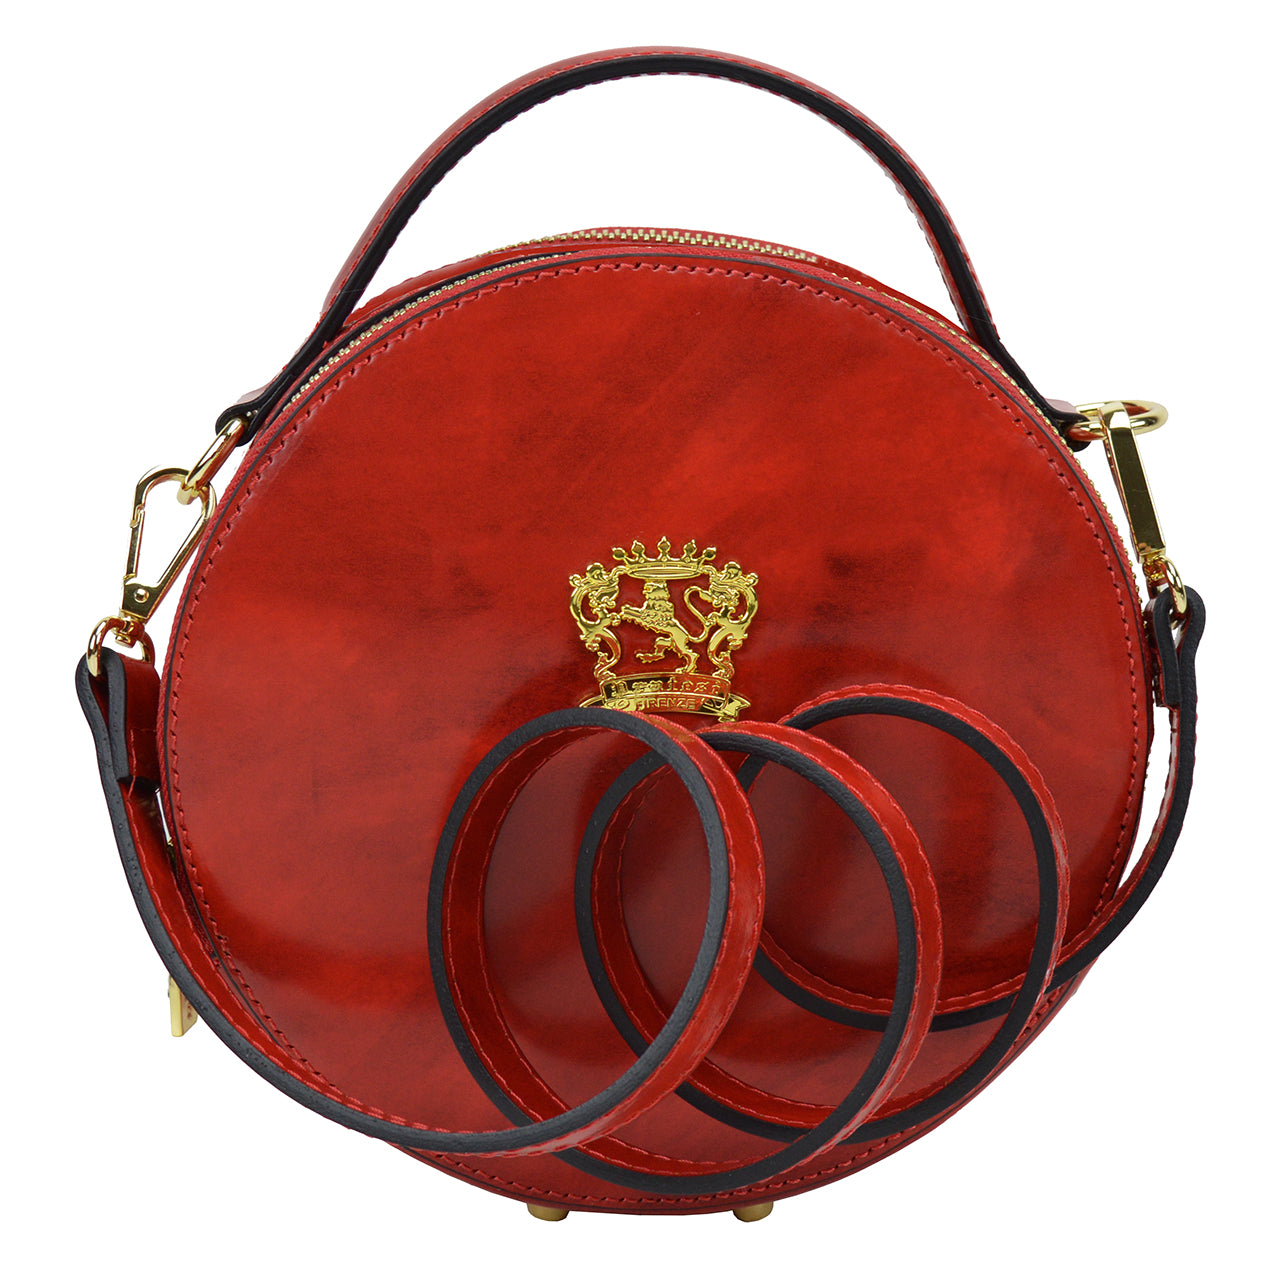 Pratesi Troghi R188 Tote Bag in genuine Italian leather